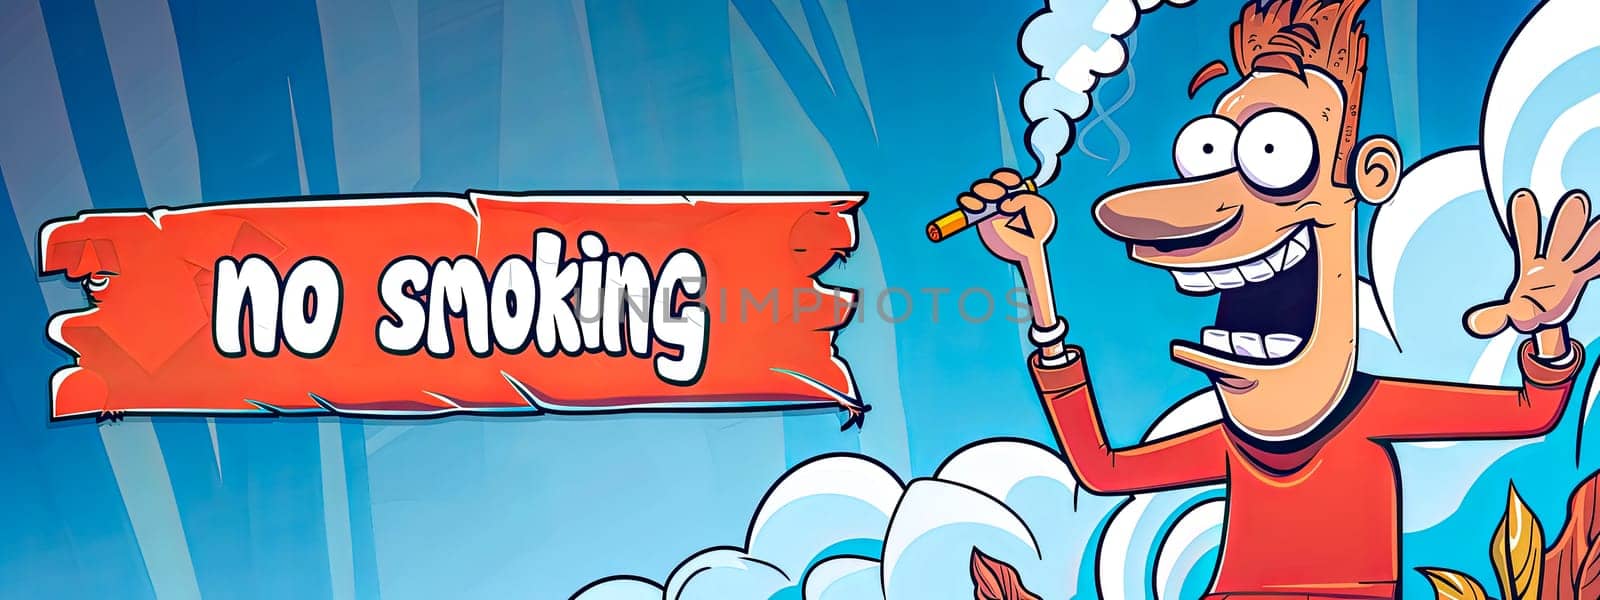 Humorous no smoking cartoon illustration by Edophoto